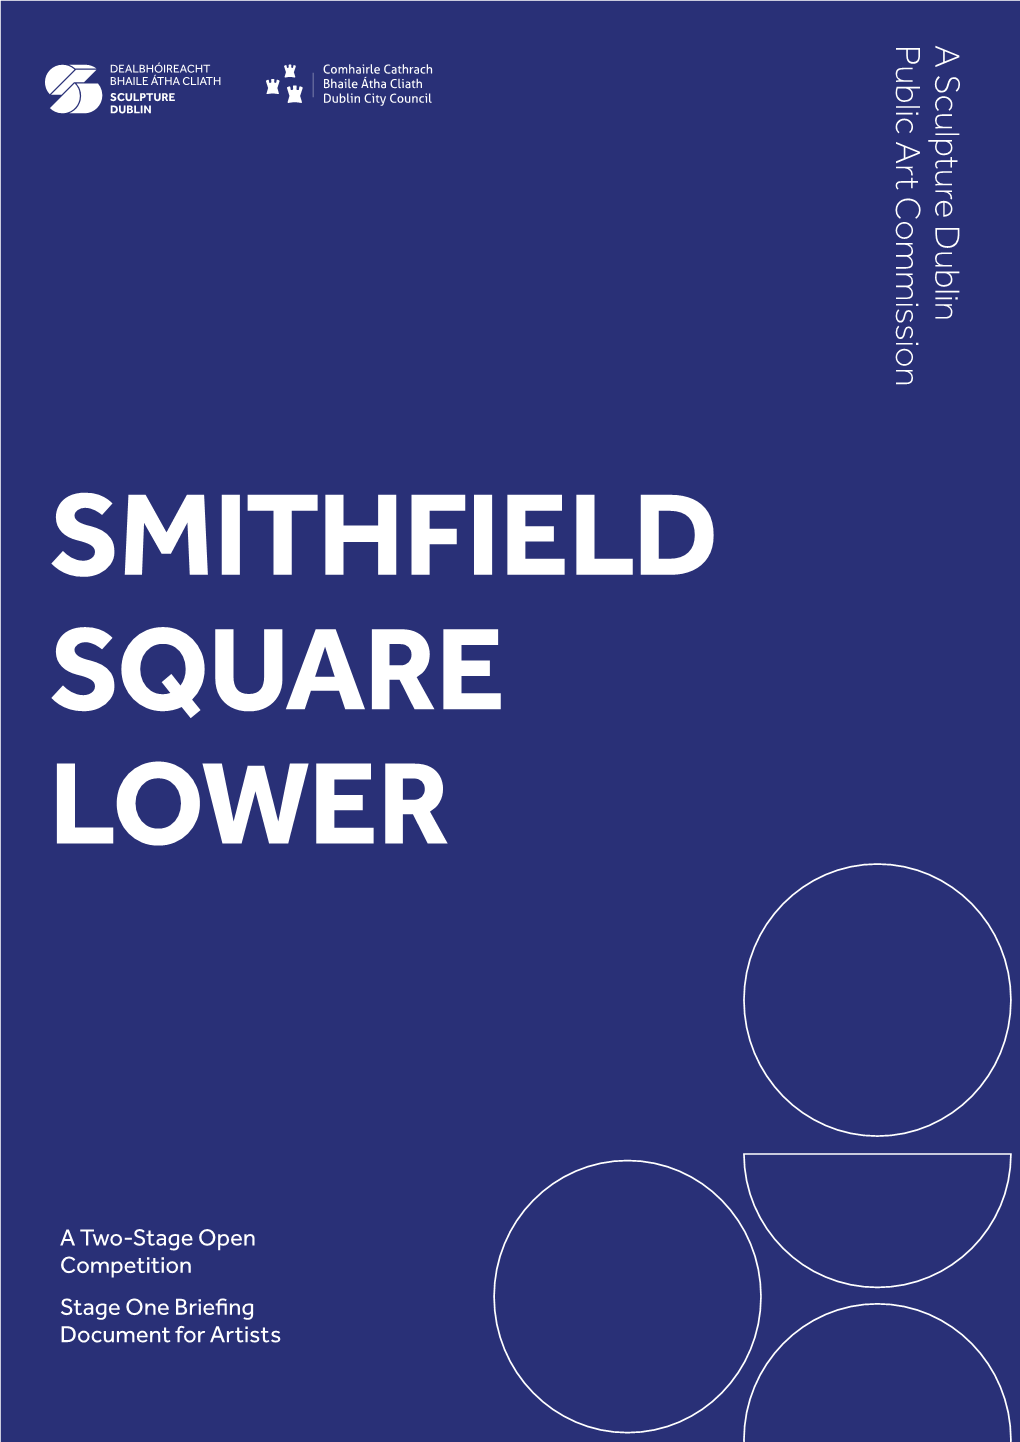 Smithfield Square Lower